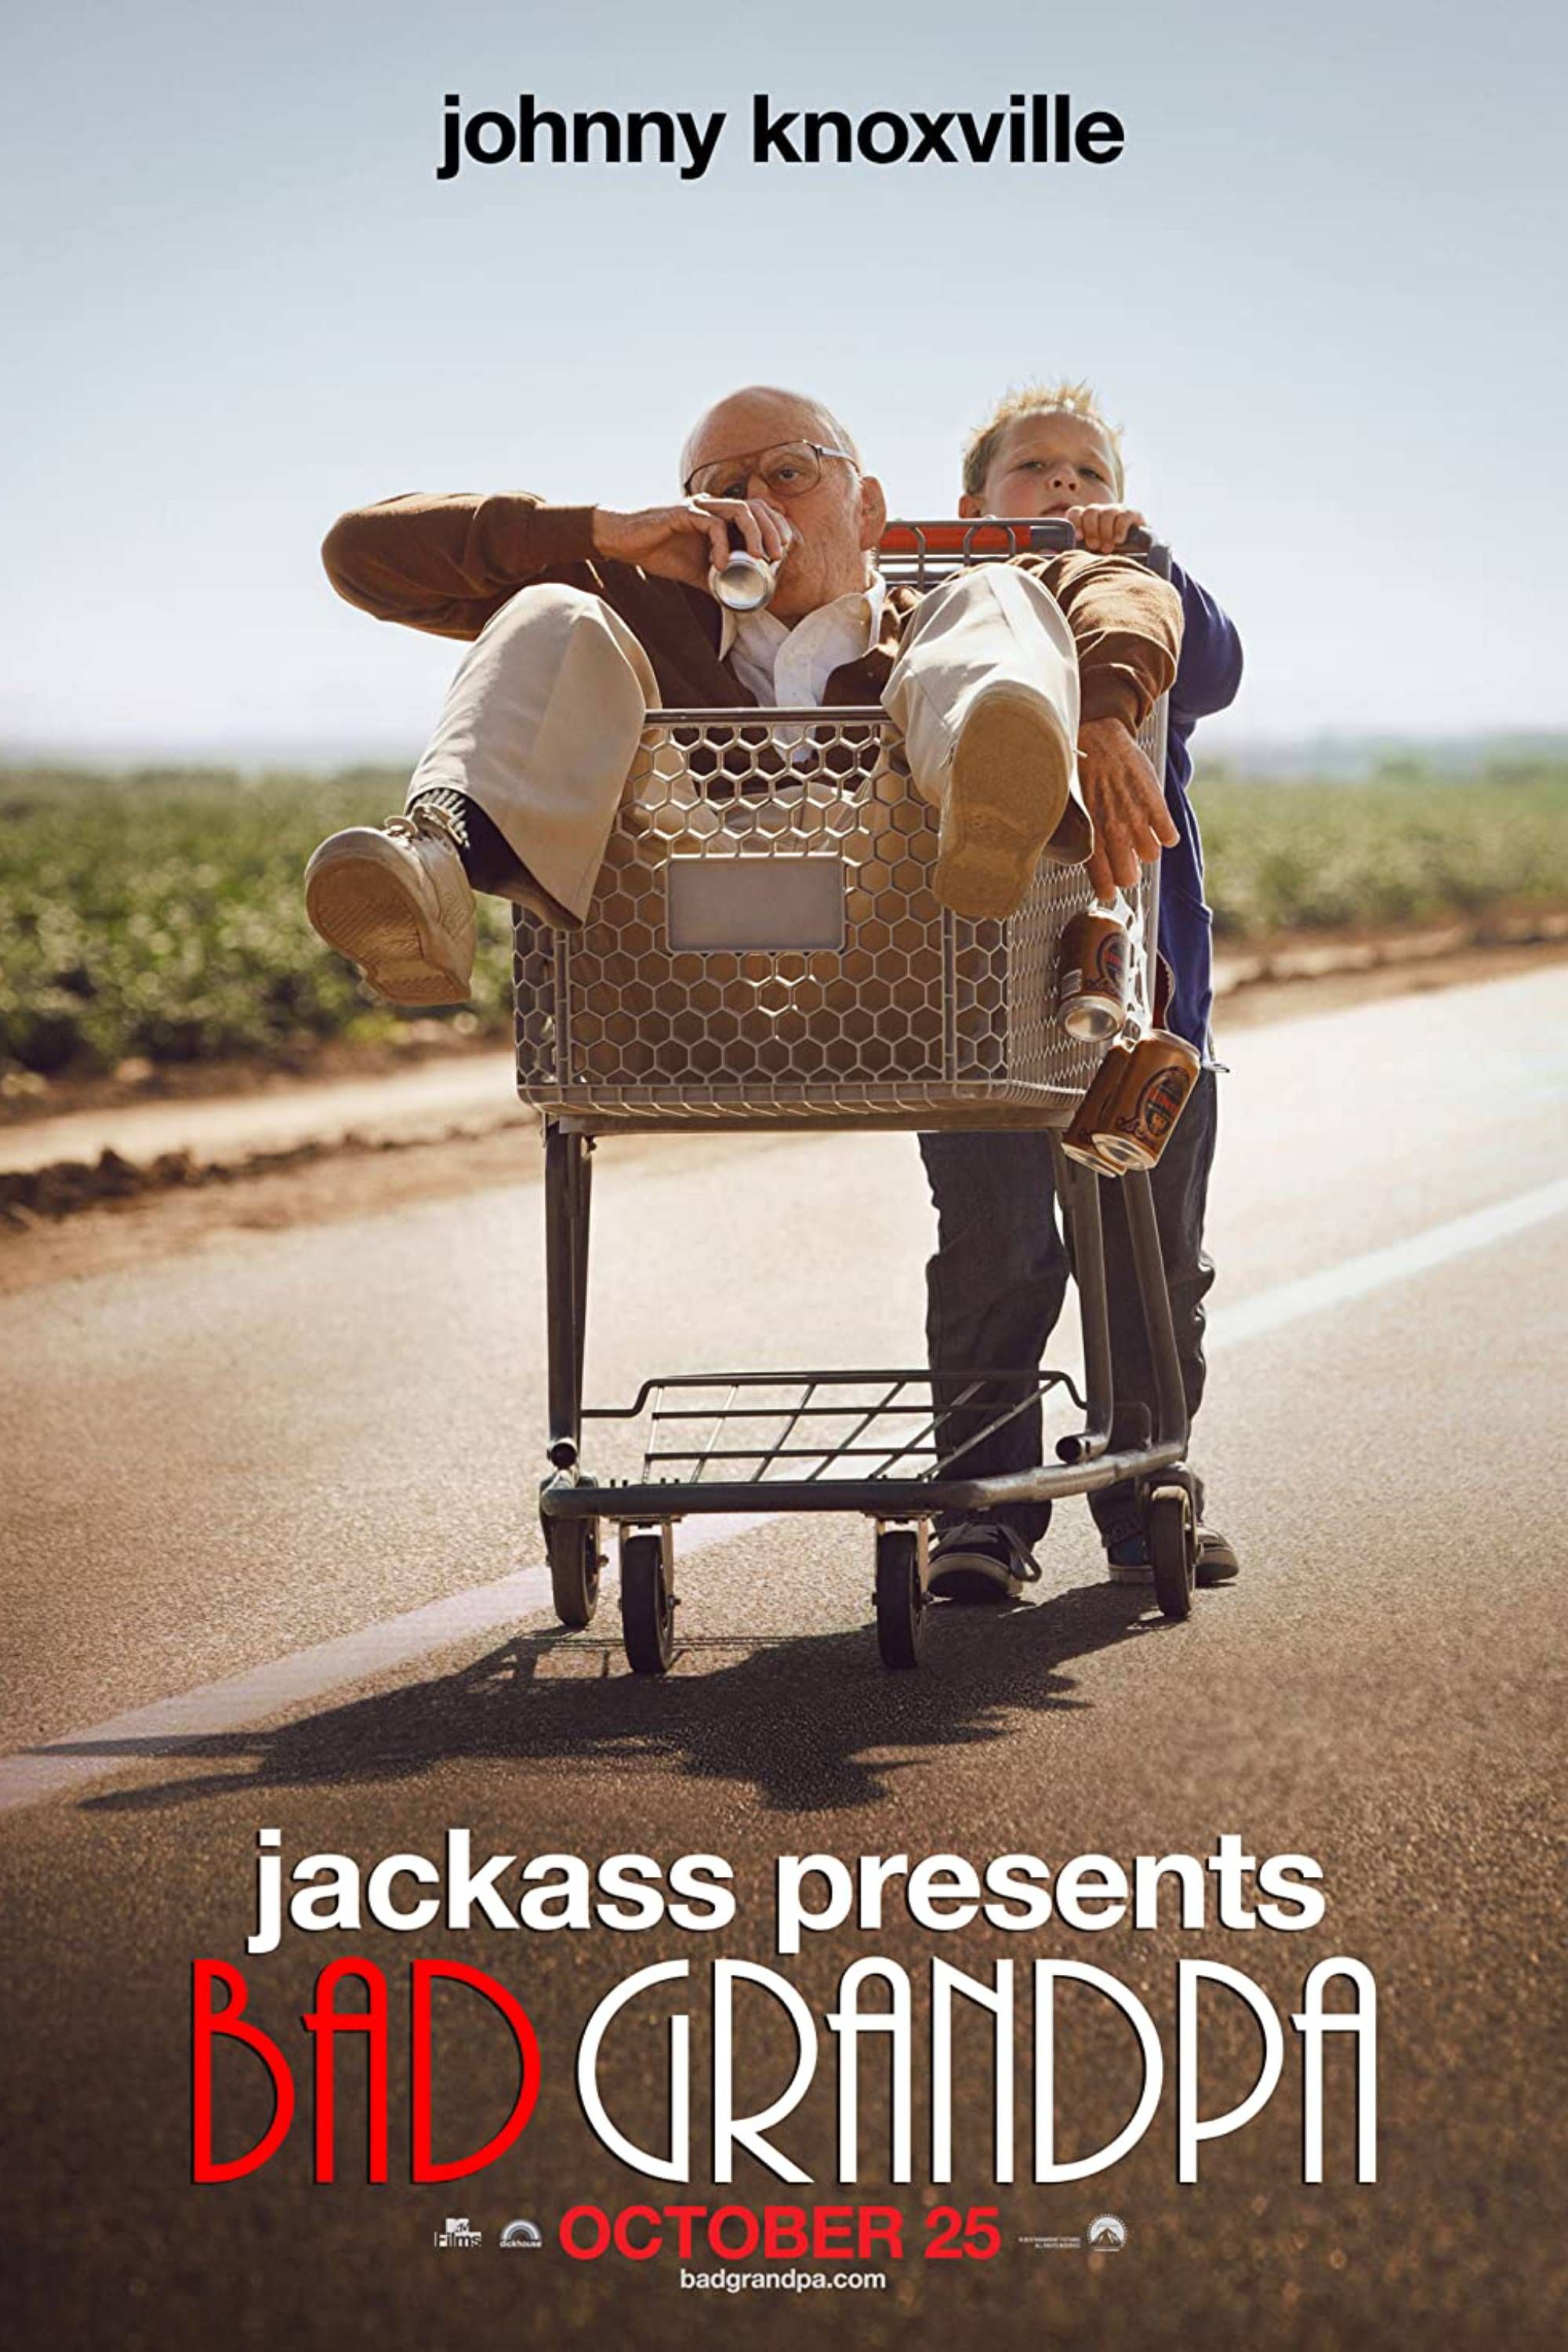 jackass presents: bad grandpa poster